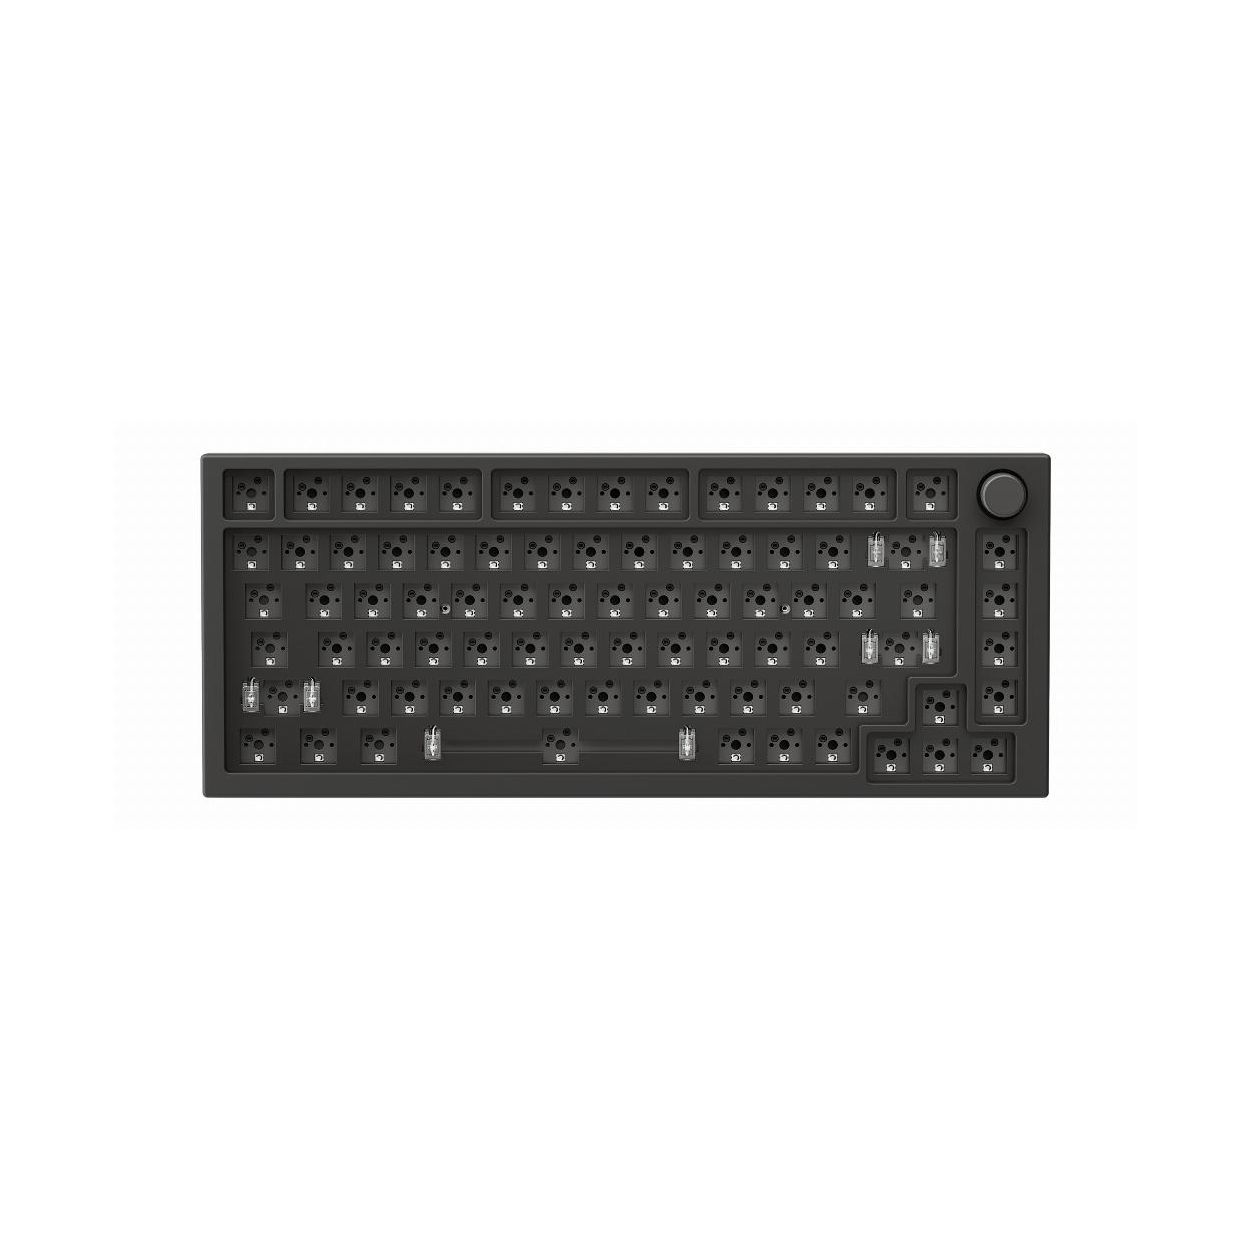 Glorious GMMK Pro TKL Gaming Keyboard Barebone - Blanc (ANSI) -  GLO-GMMK-P75-RGB-W 